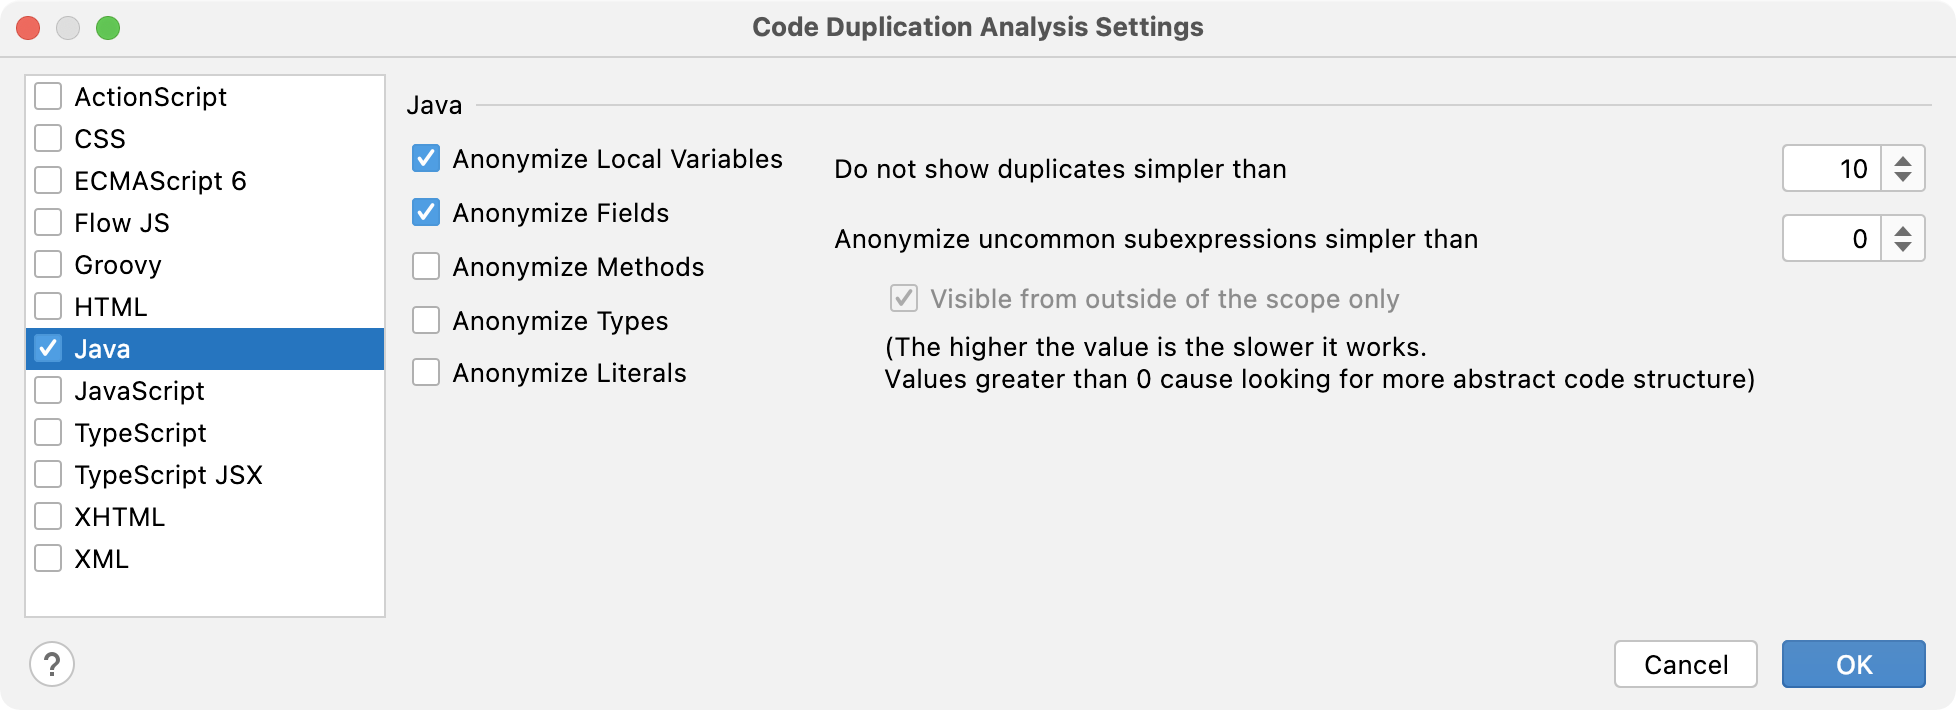 Code Duplication Analysis Settings